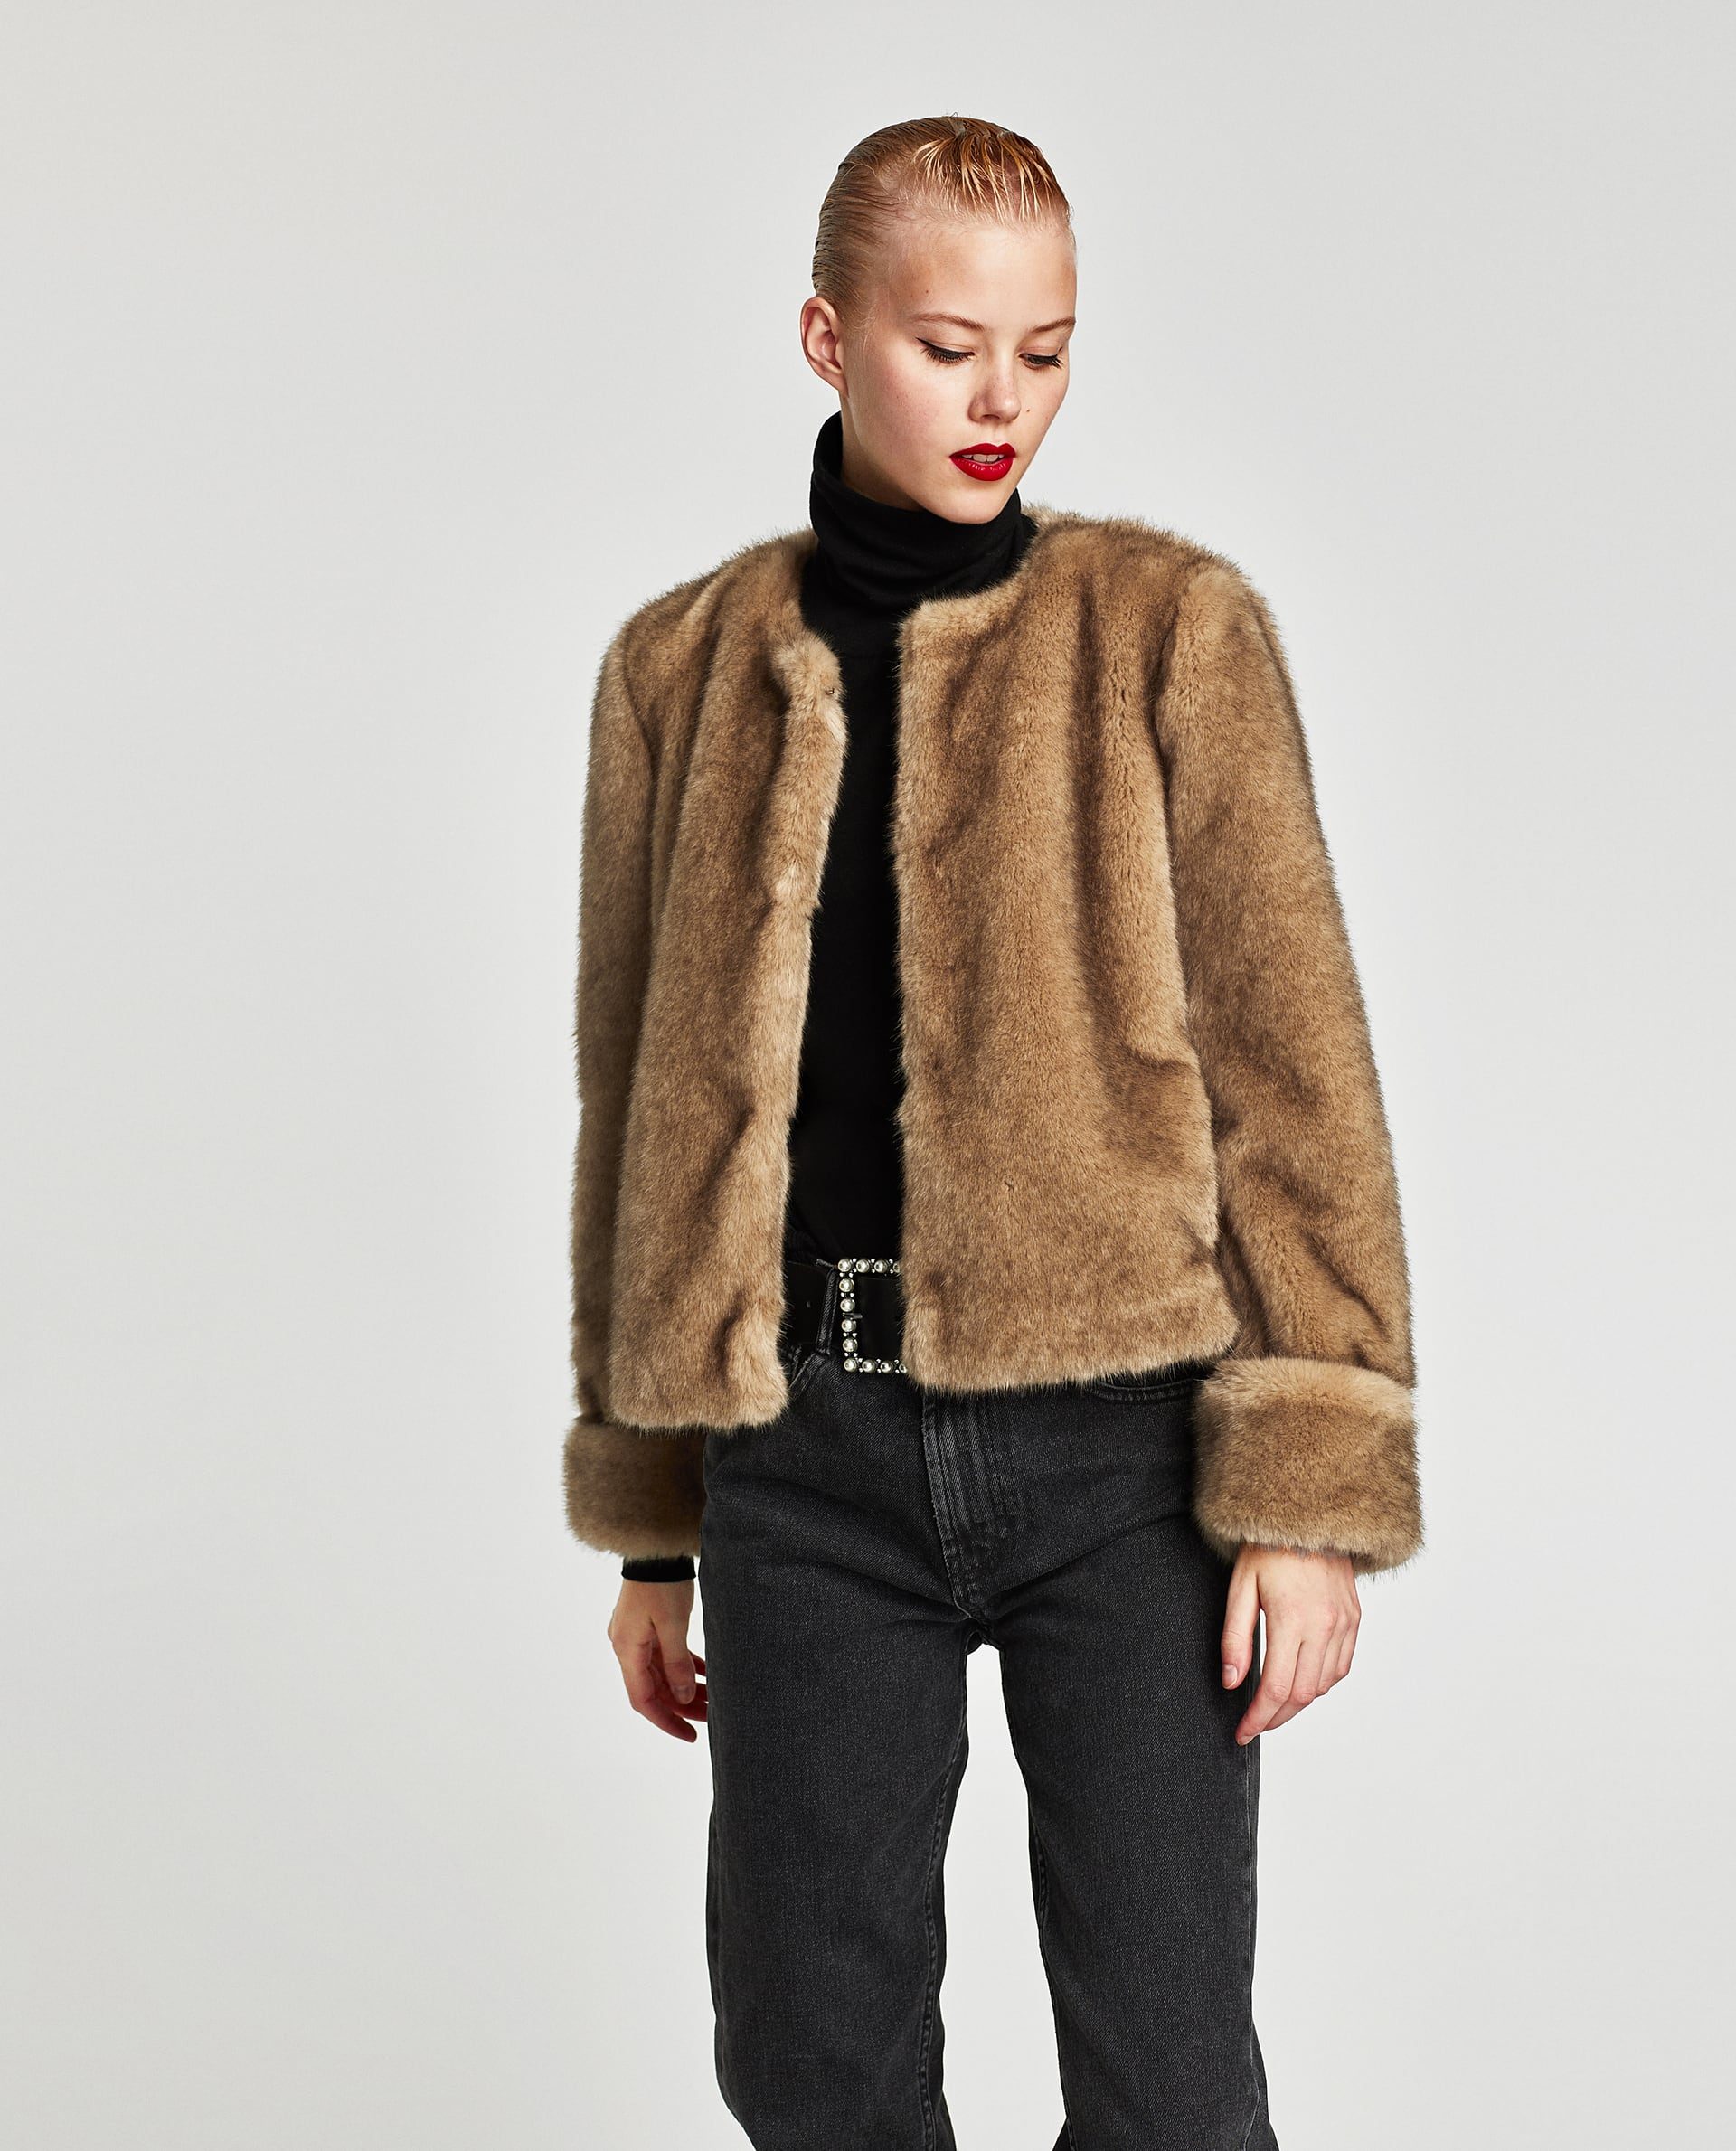 Faux fur jacket (P2,595), Zara.com 